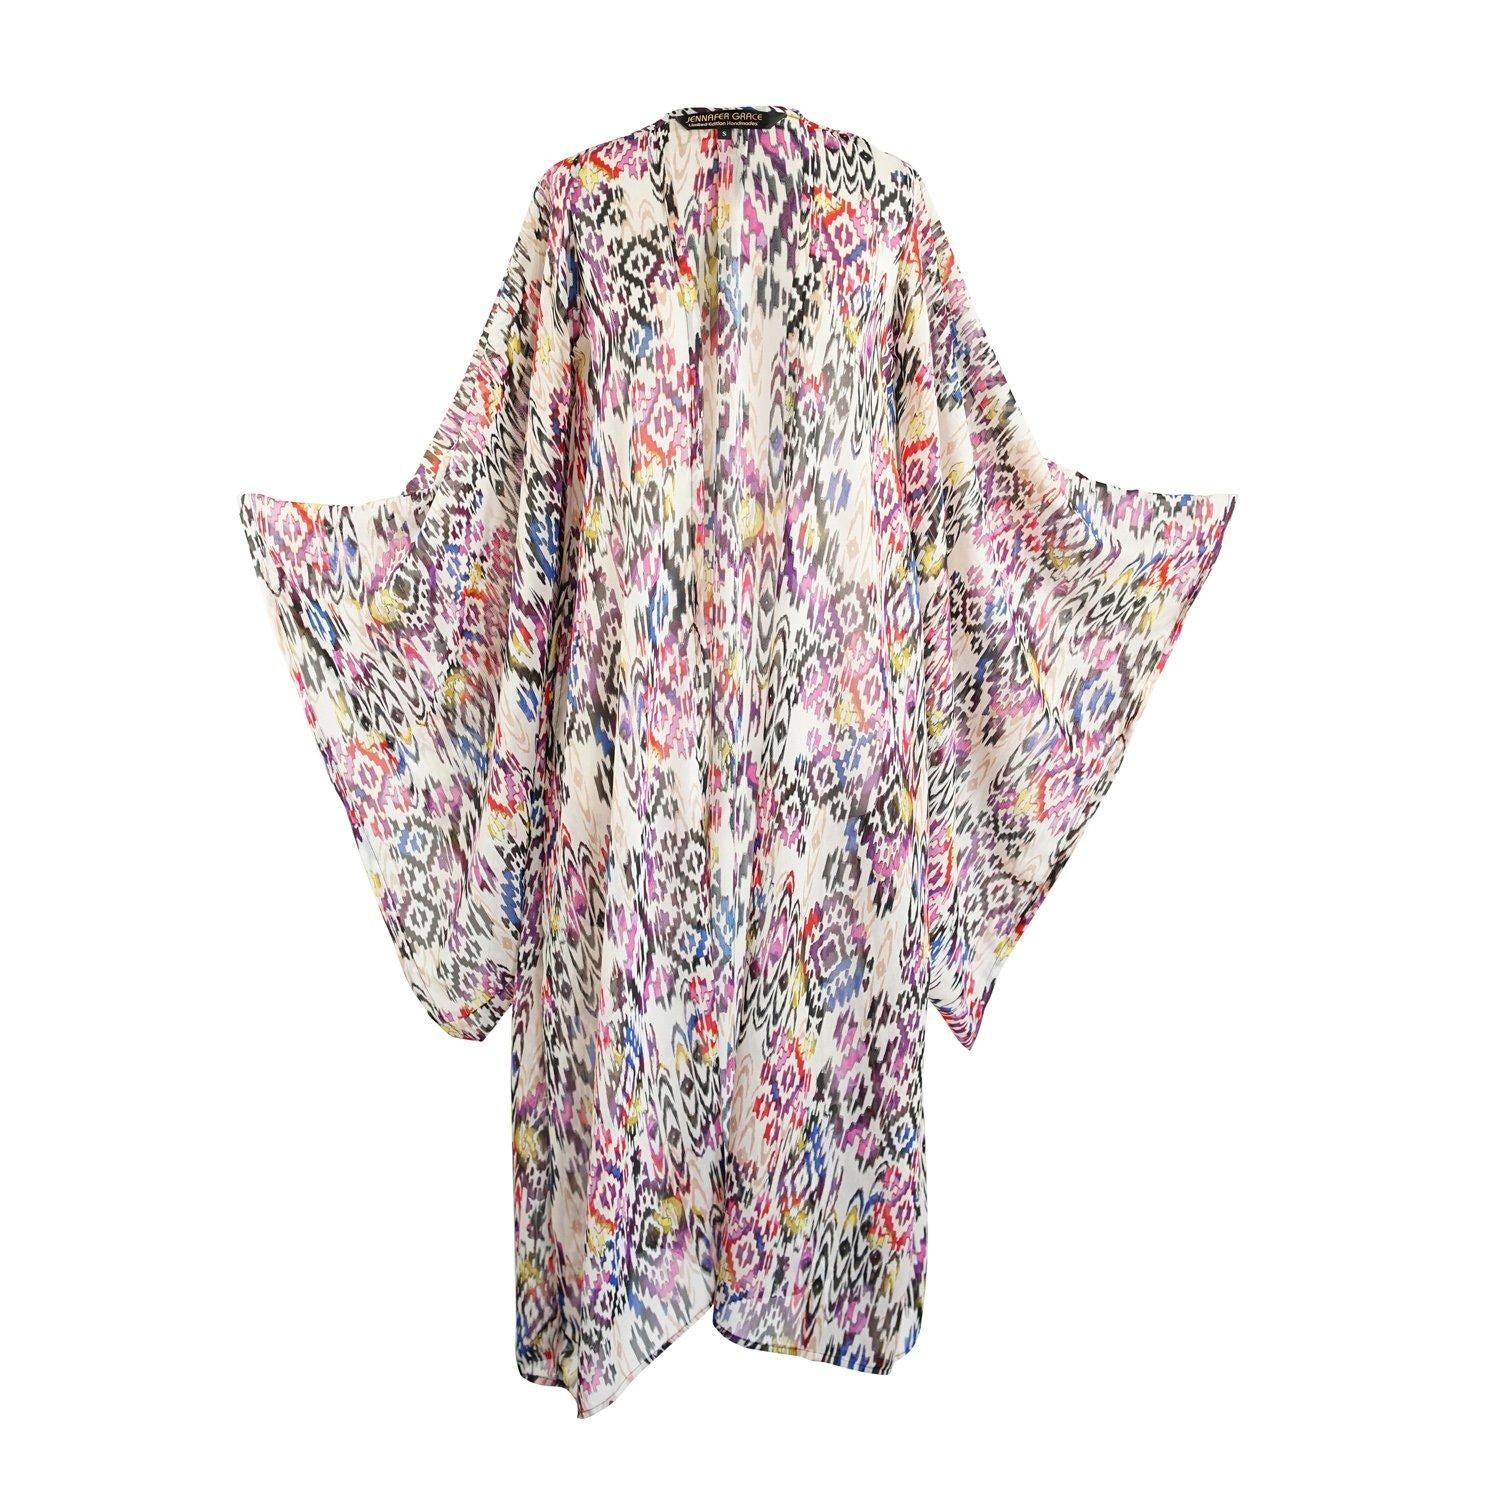 jennafer grace kimono semi sheer rainbow tribal chiffon coverup wrap dress duster boho bohemian hippie handmade